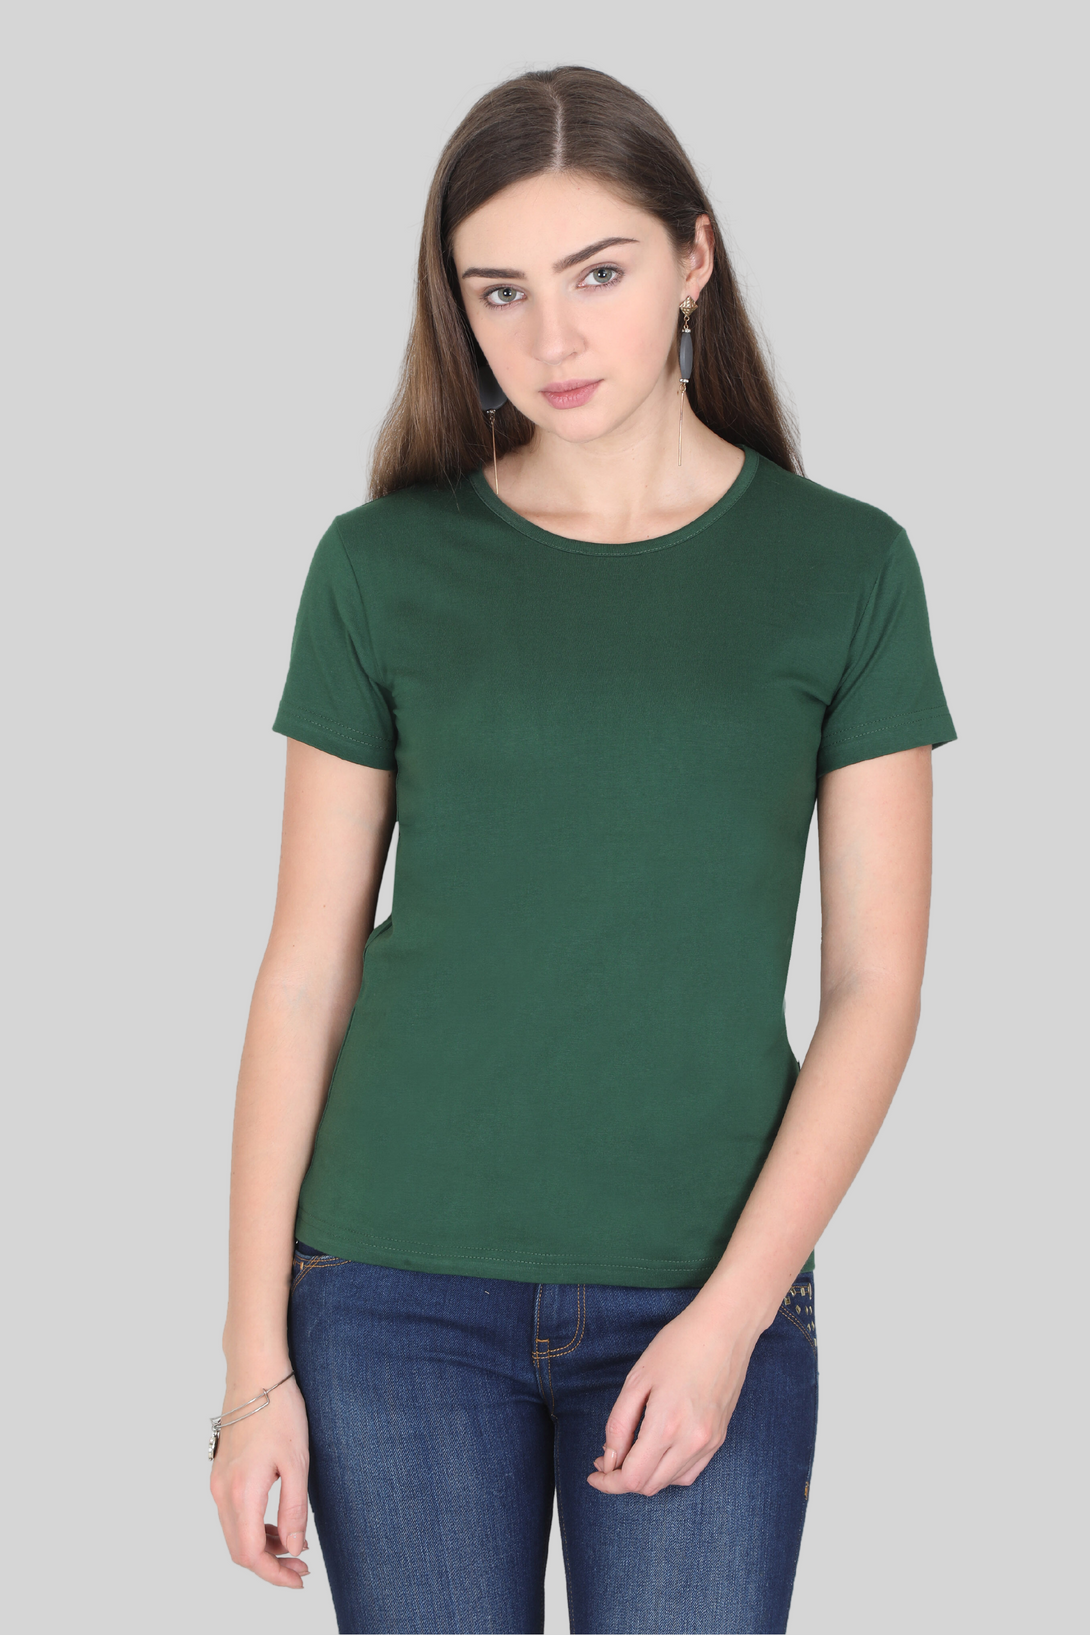 Bottle Green Scoop Neck T-Shirt For Women - WowWaves - 1